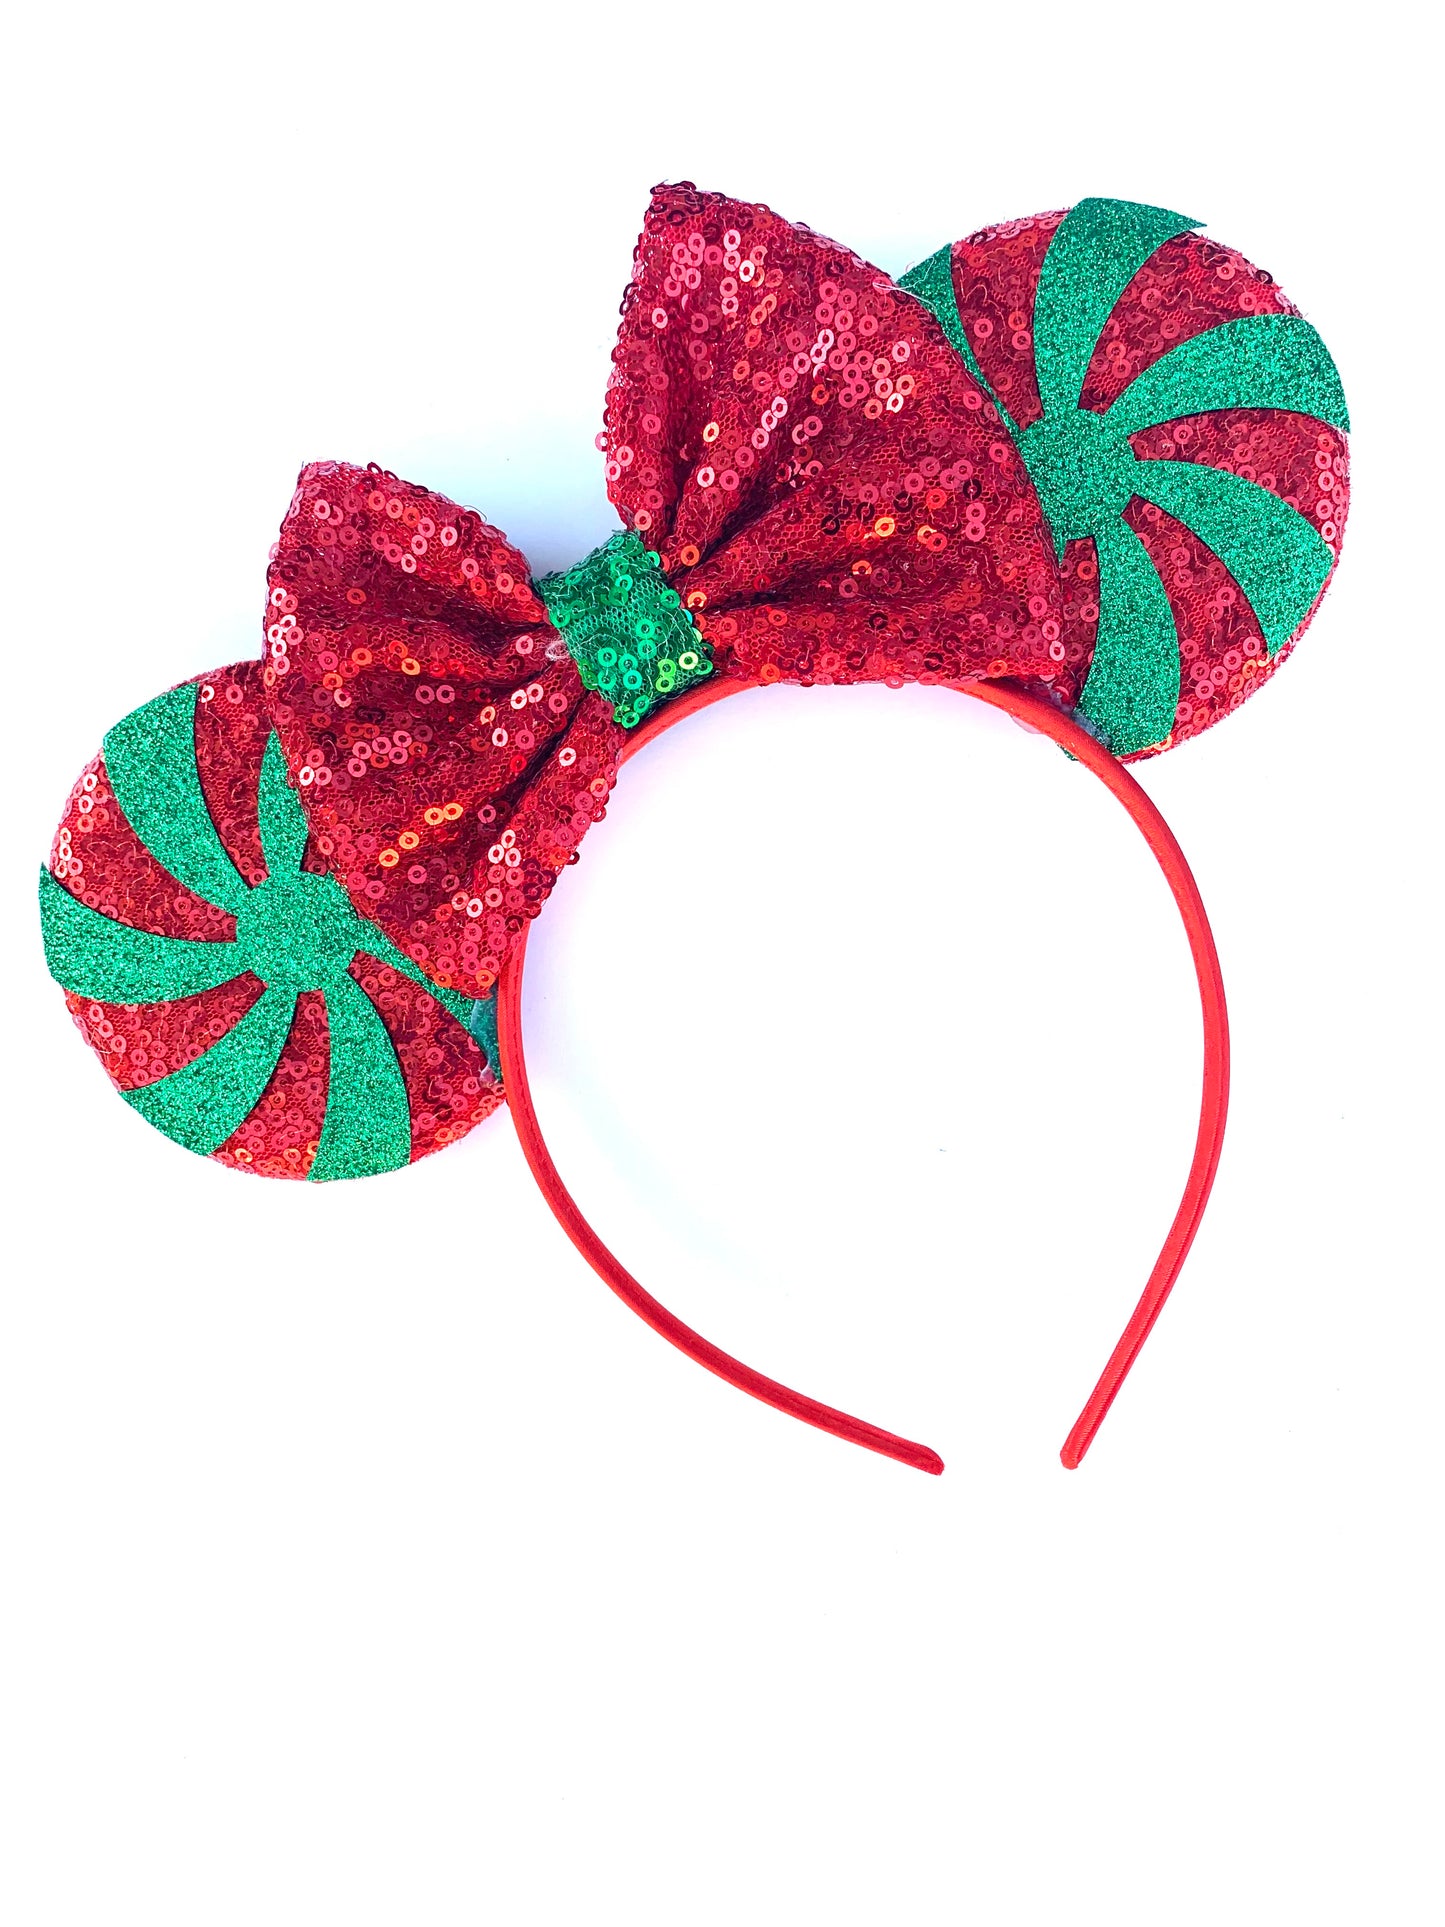 Candy Cane Mouse Ear Headband